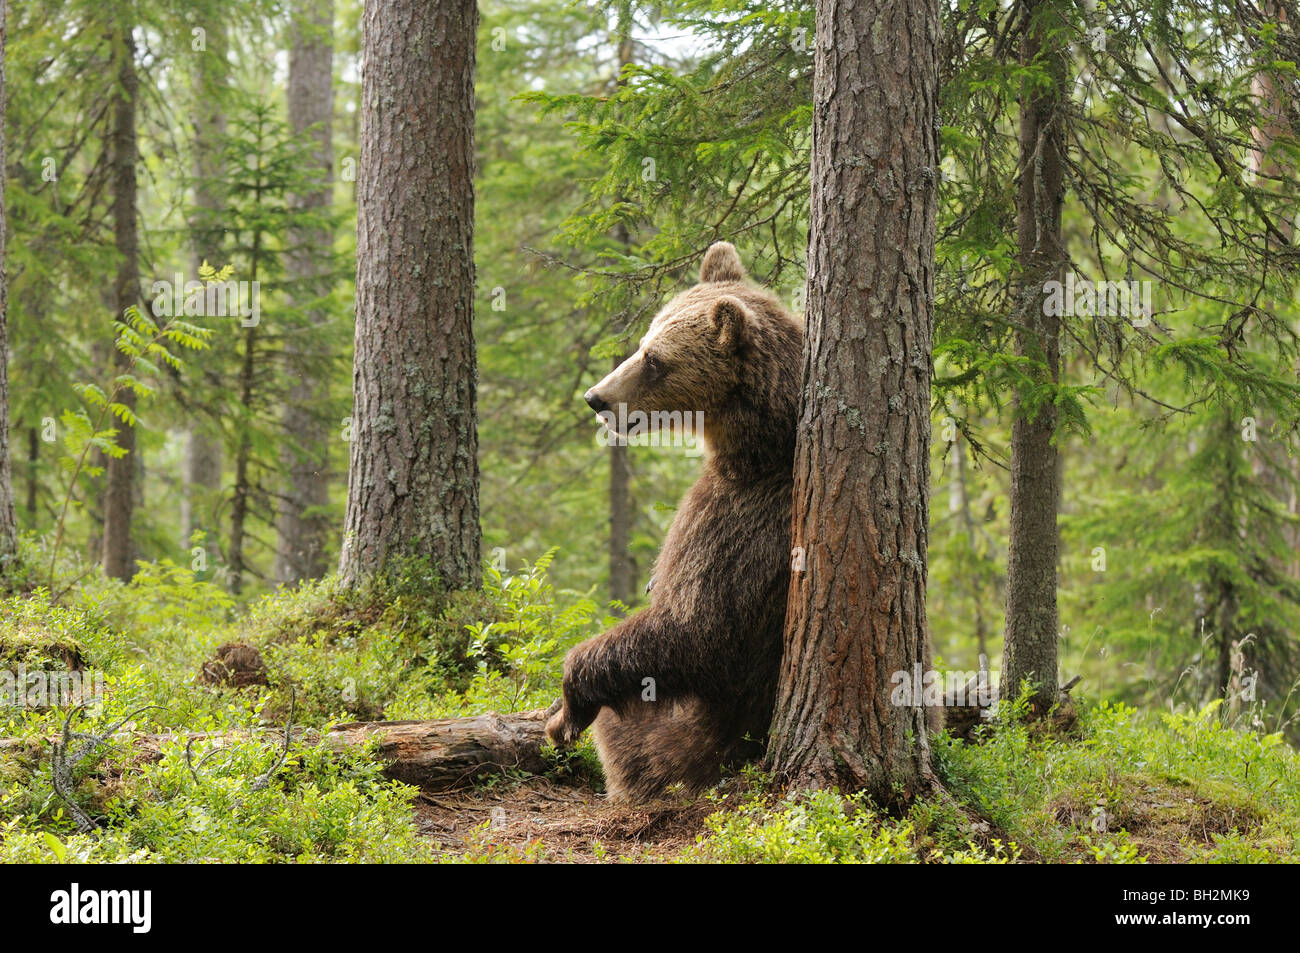 Oso Pardo europeo Ursos arctos descansando después de rascarse contra árbol fotografiado en Finlandia Foto de stock